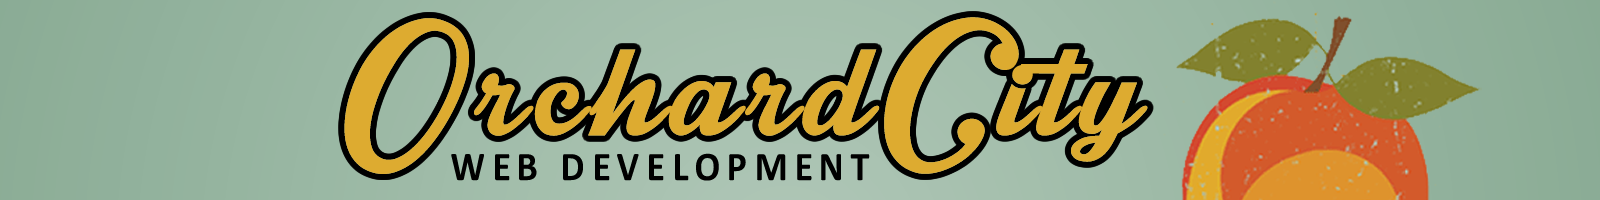 Orchardcity Logo Header Large 